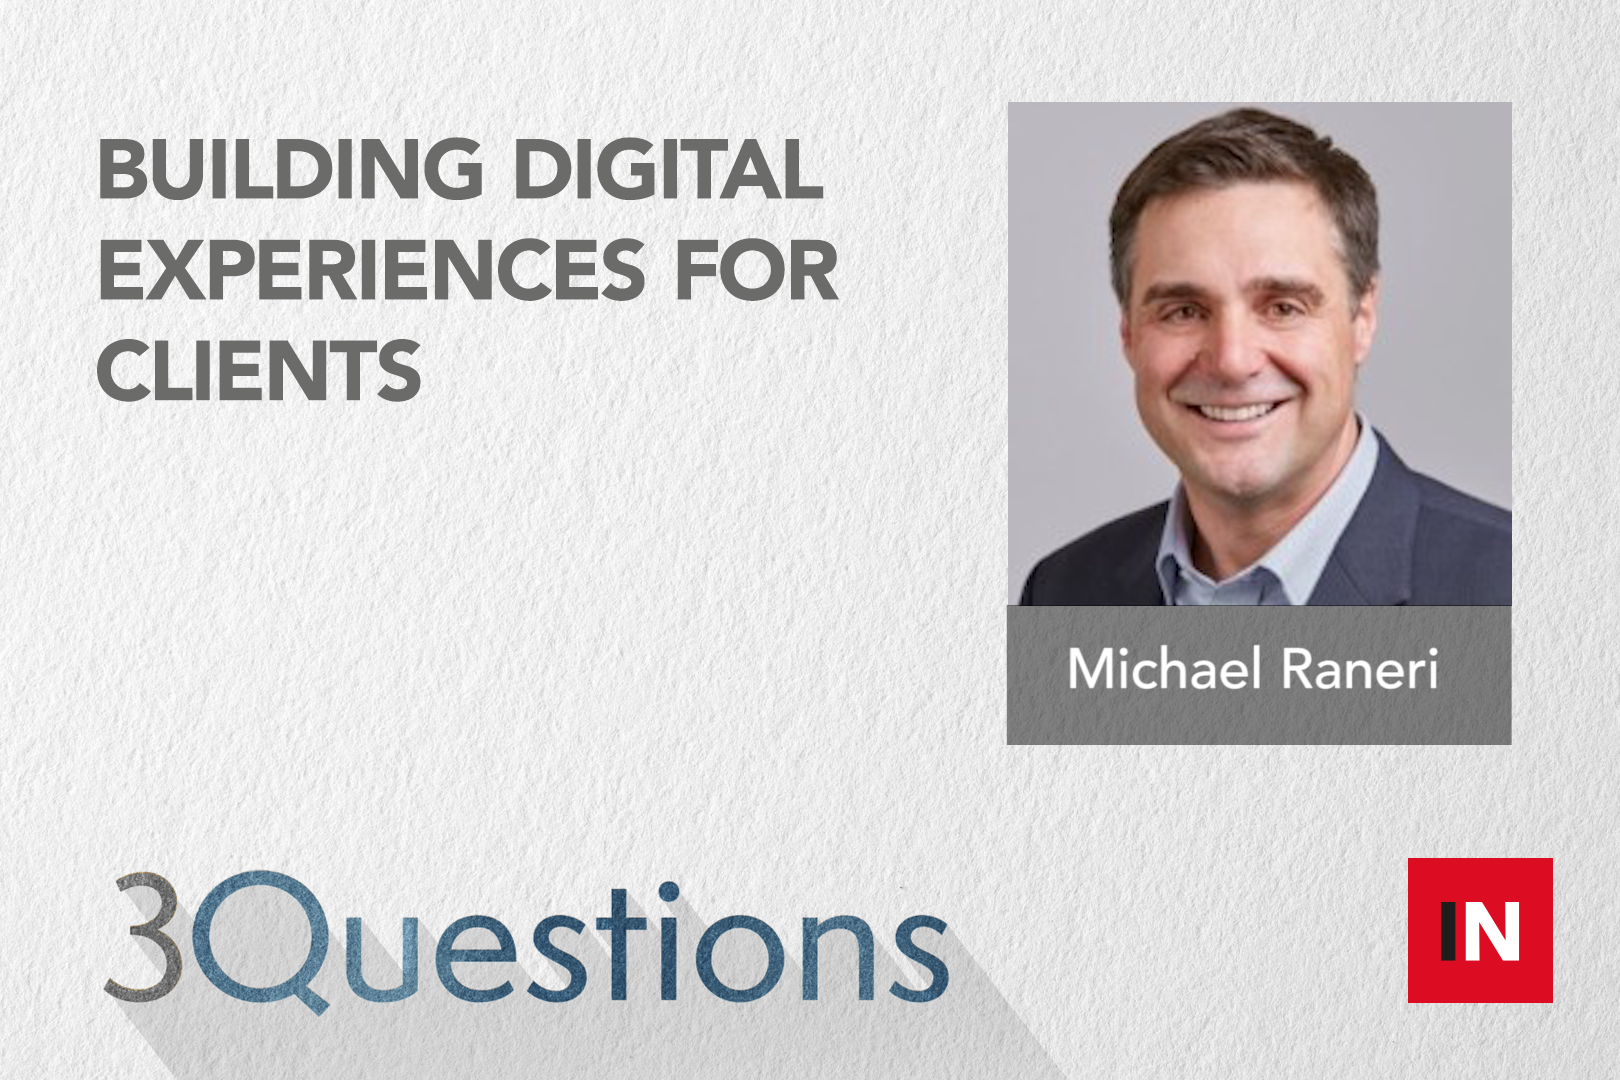 Building digital experiences for clients